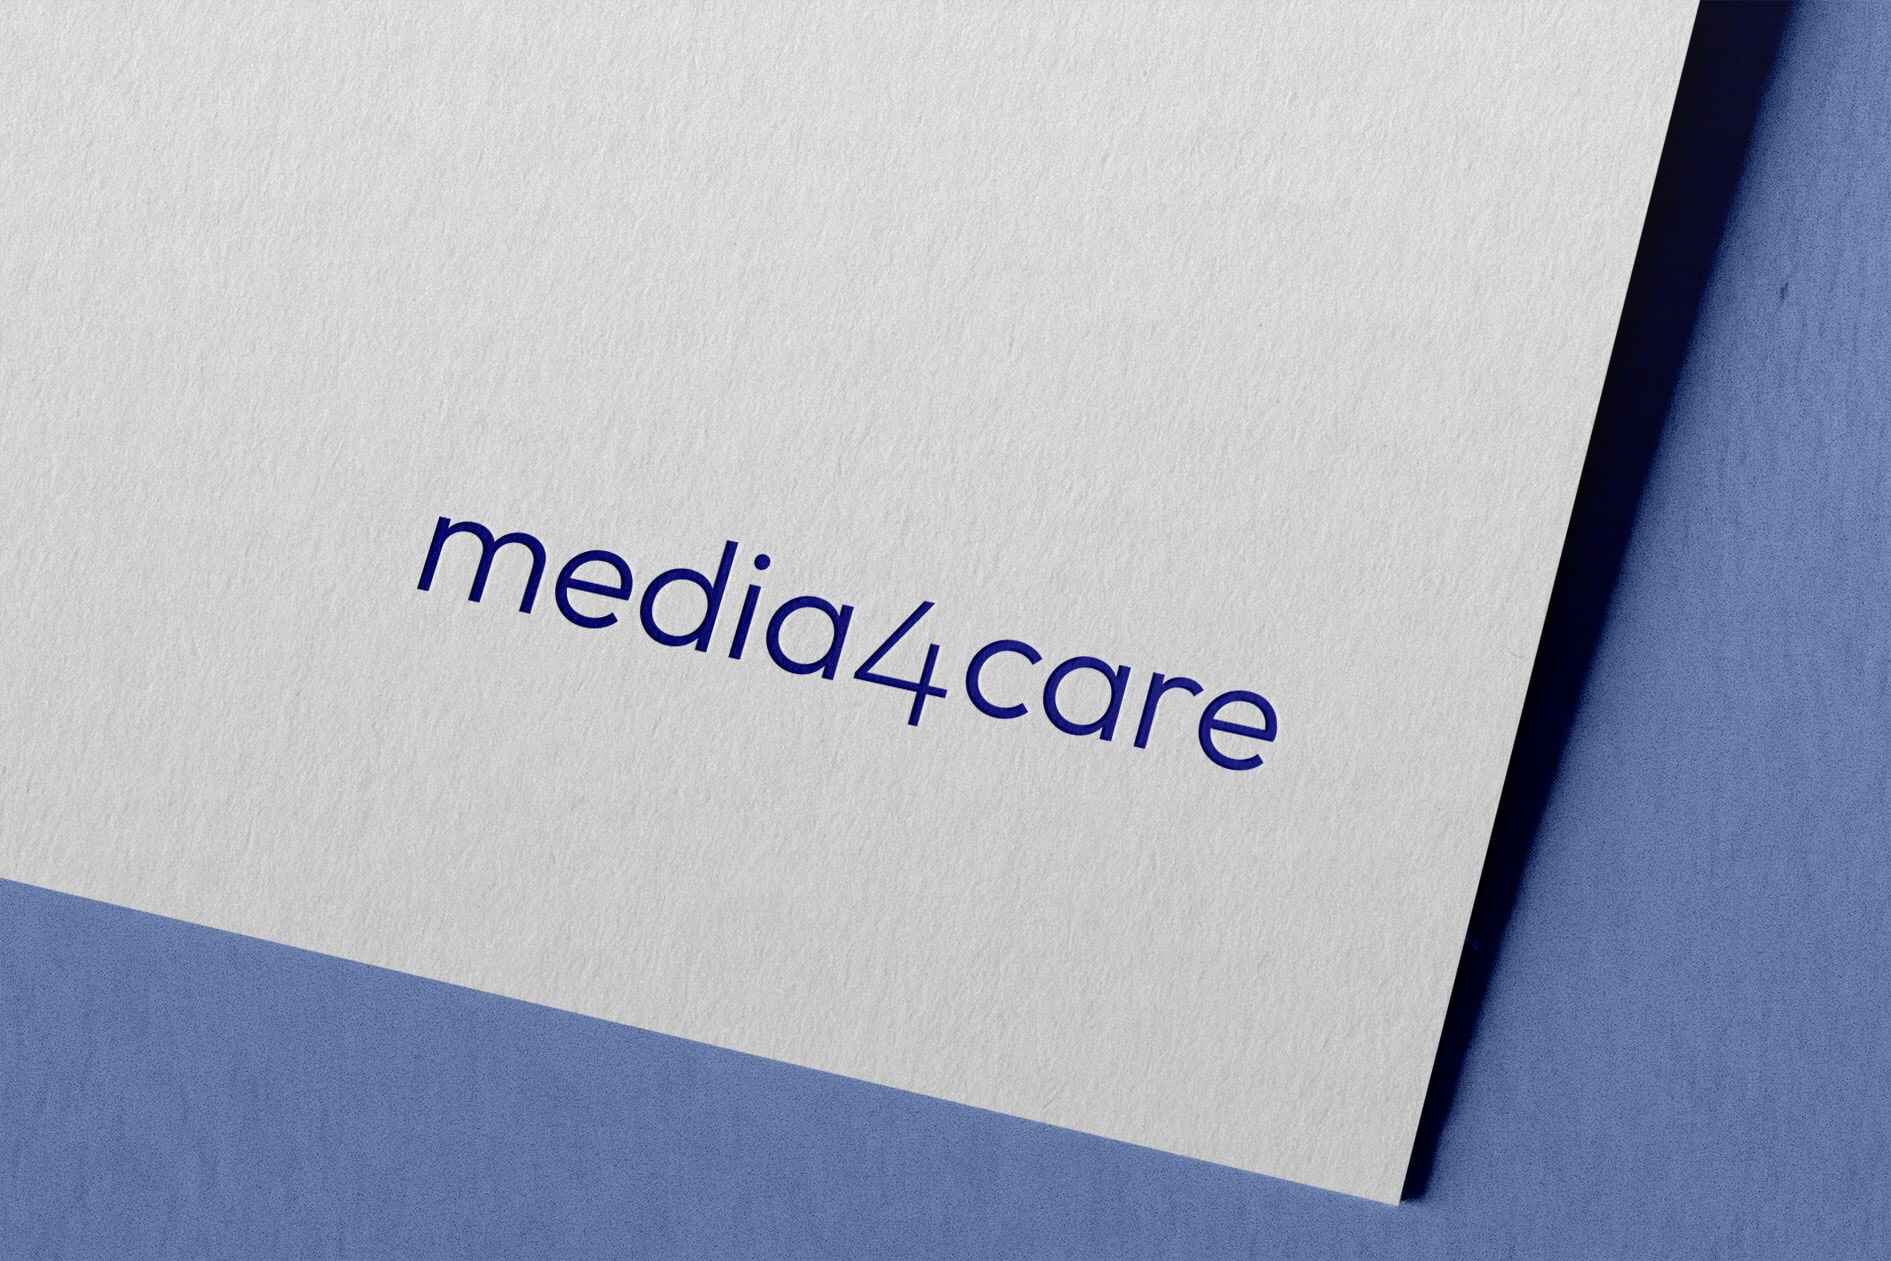 Media4Care - Presse über uns - Professionelle Seniorenbetreuung und Betreuung zu Hause